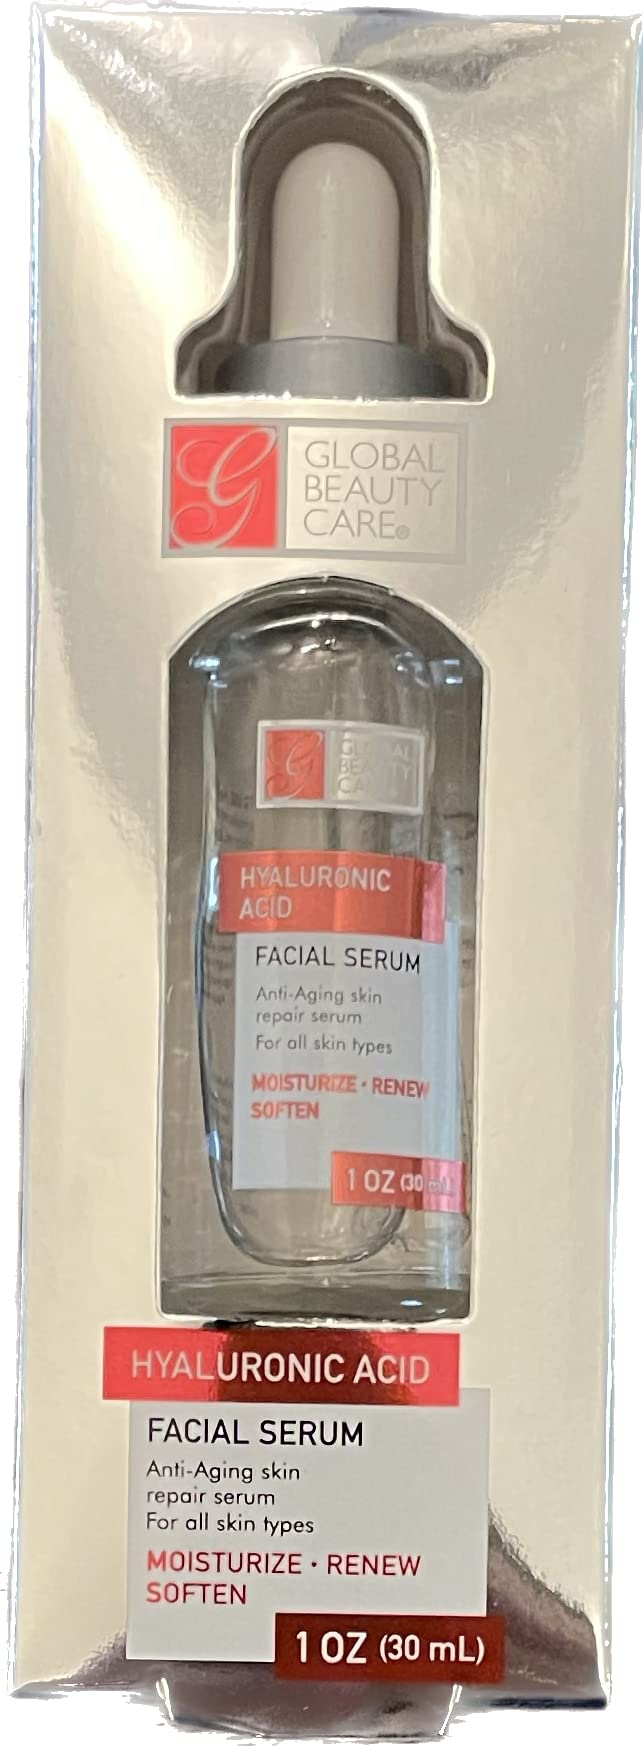 Global Beauty Care Hyaluronic Acid Facial Serum